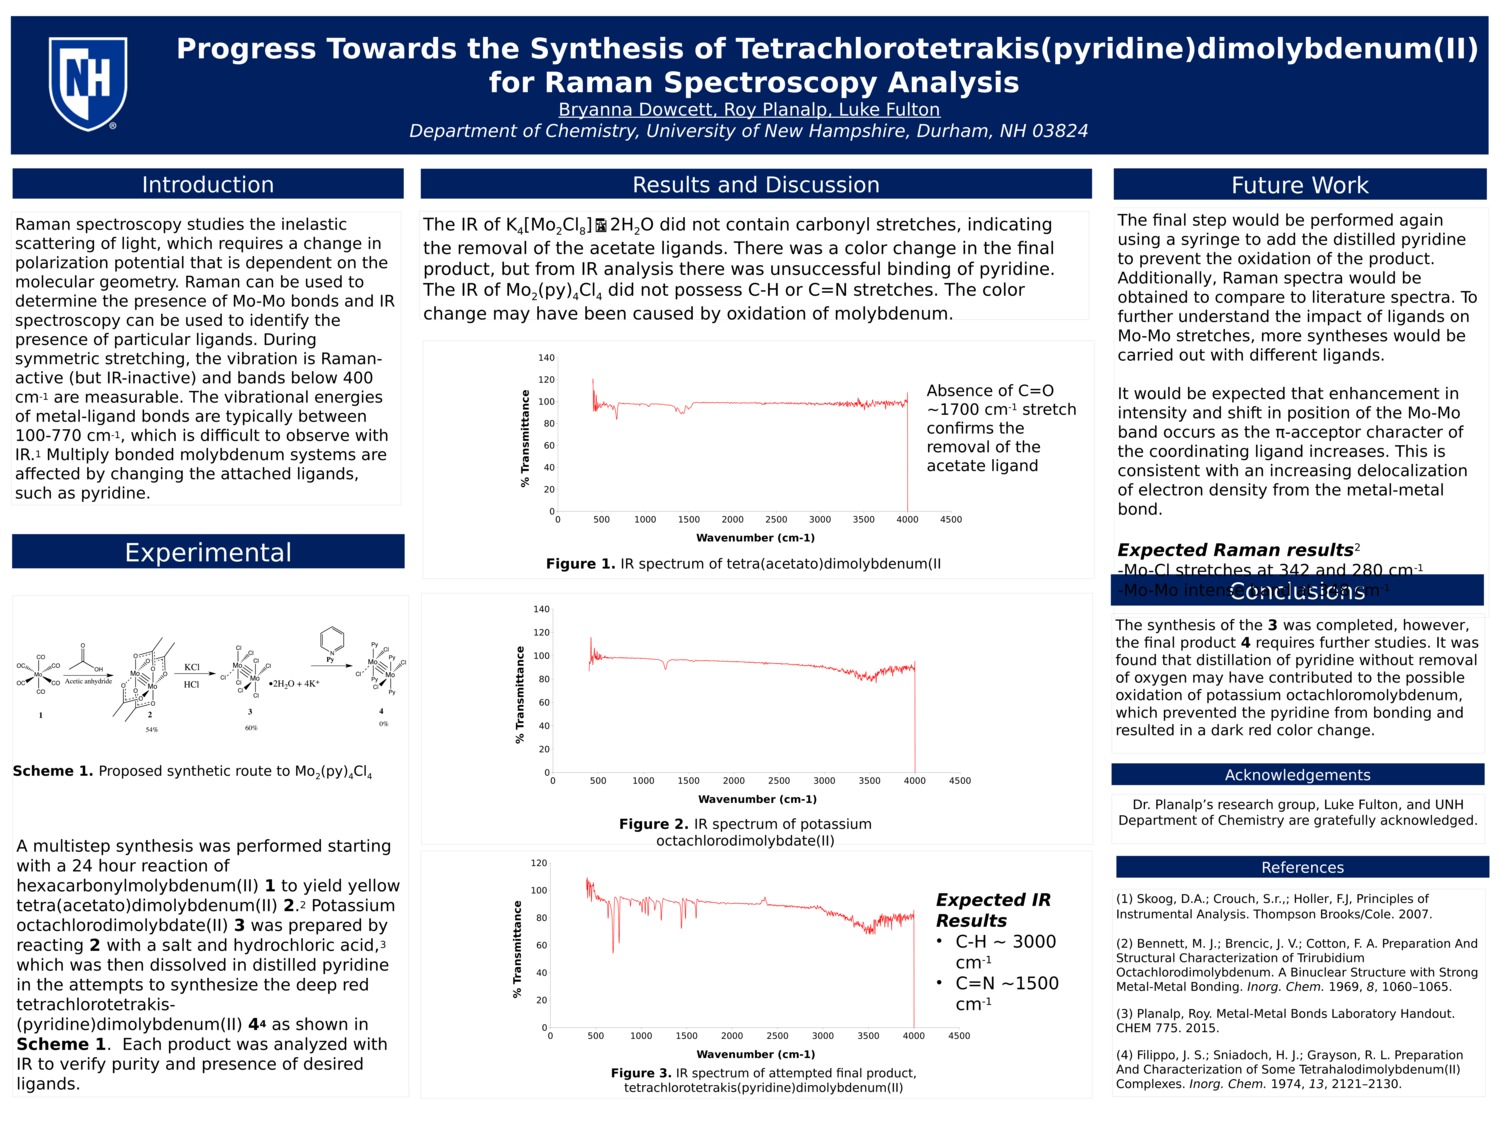 Progress Towards The Synthesis Of Tetrachlorotetrakis(Pyridine)Dimolybdenum(Ii) For Analysis By Raman Spectroscopy by brd10